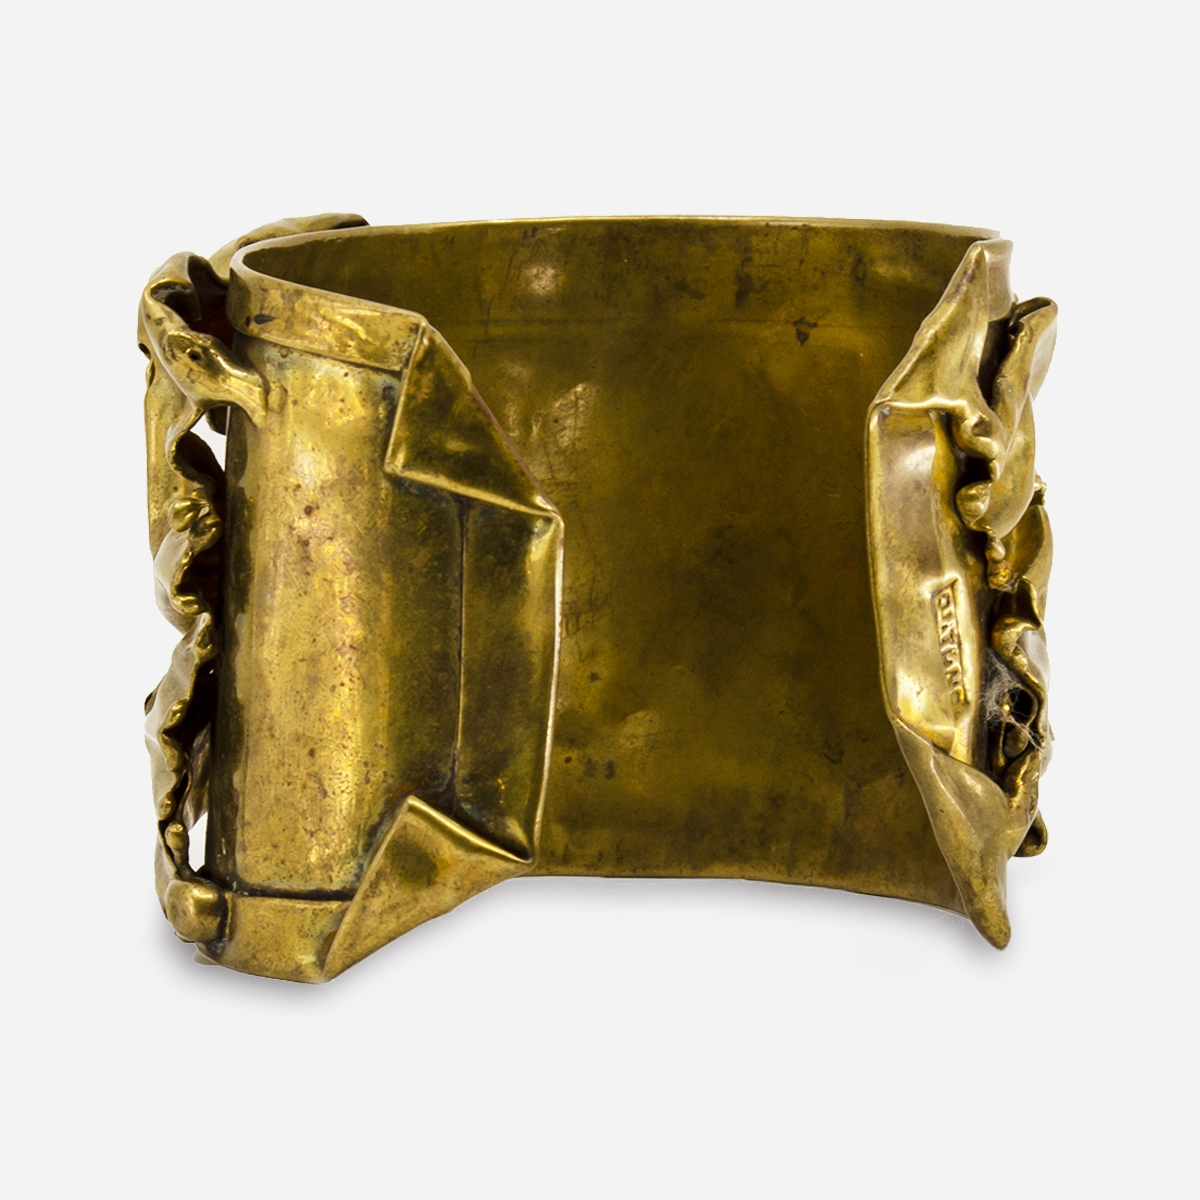 Dutra's Brass bracelet